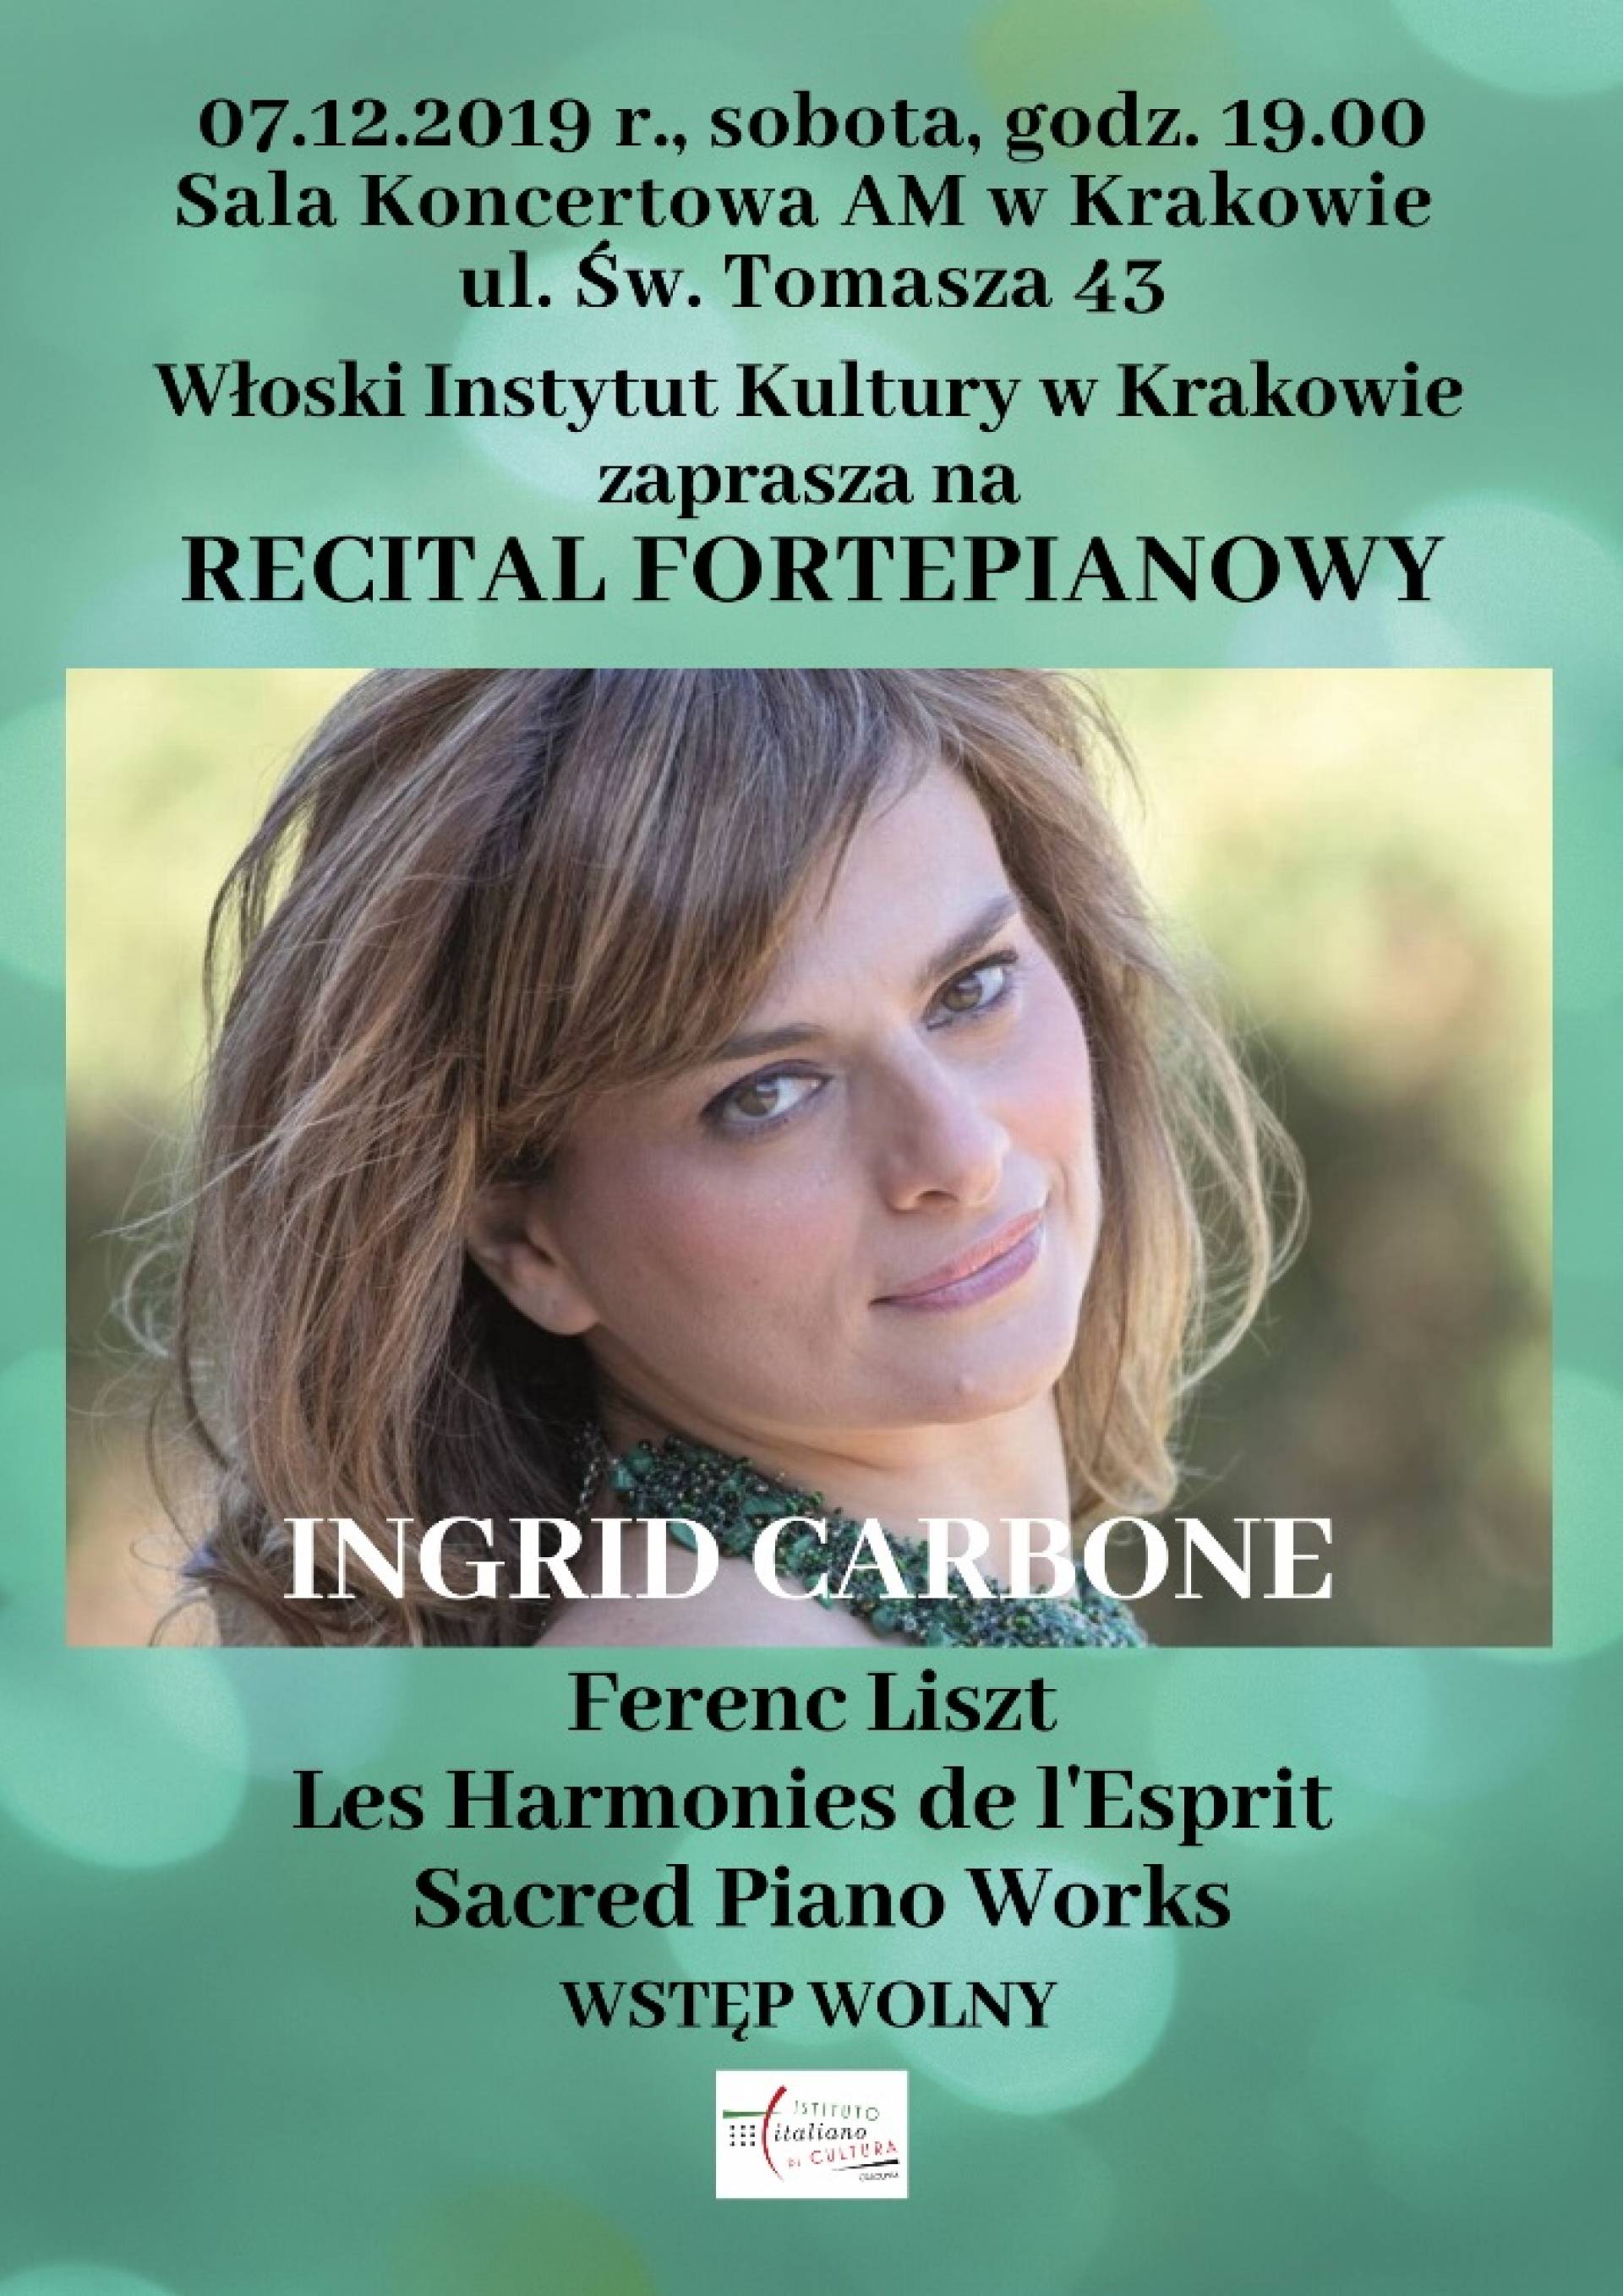 Recital fortepianowy Ingrid Carbone - F. Liszt